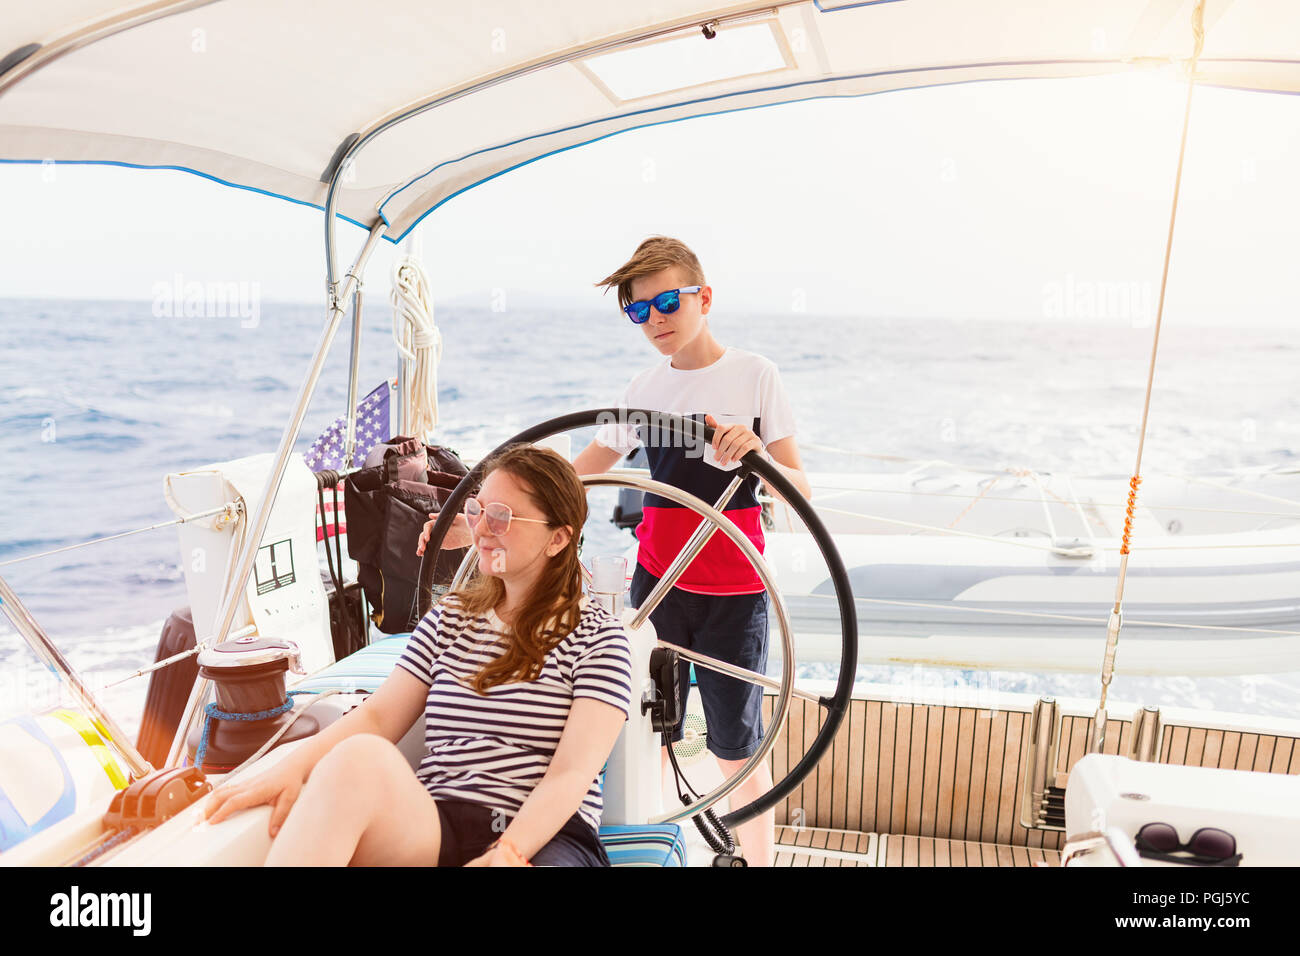 Familia de madre e hijo a bordo del velero que aventura de viaje de verano Foto de stock